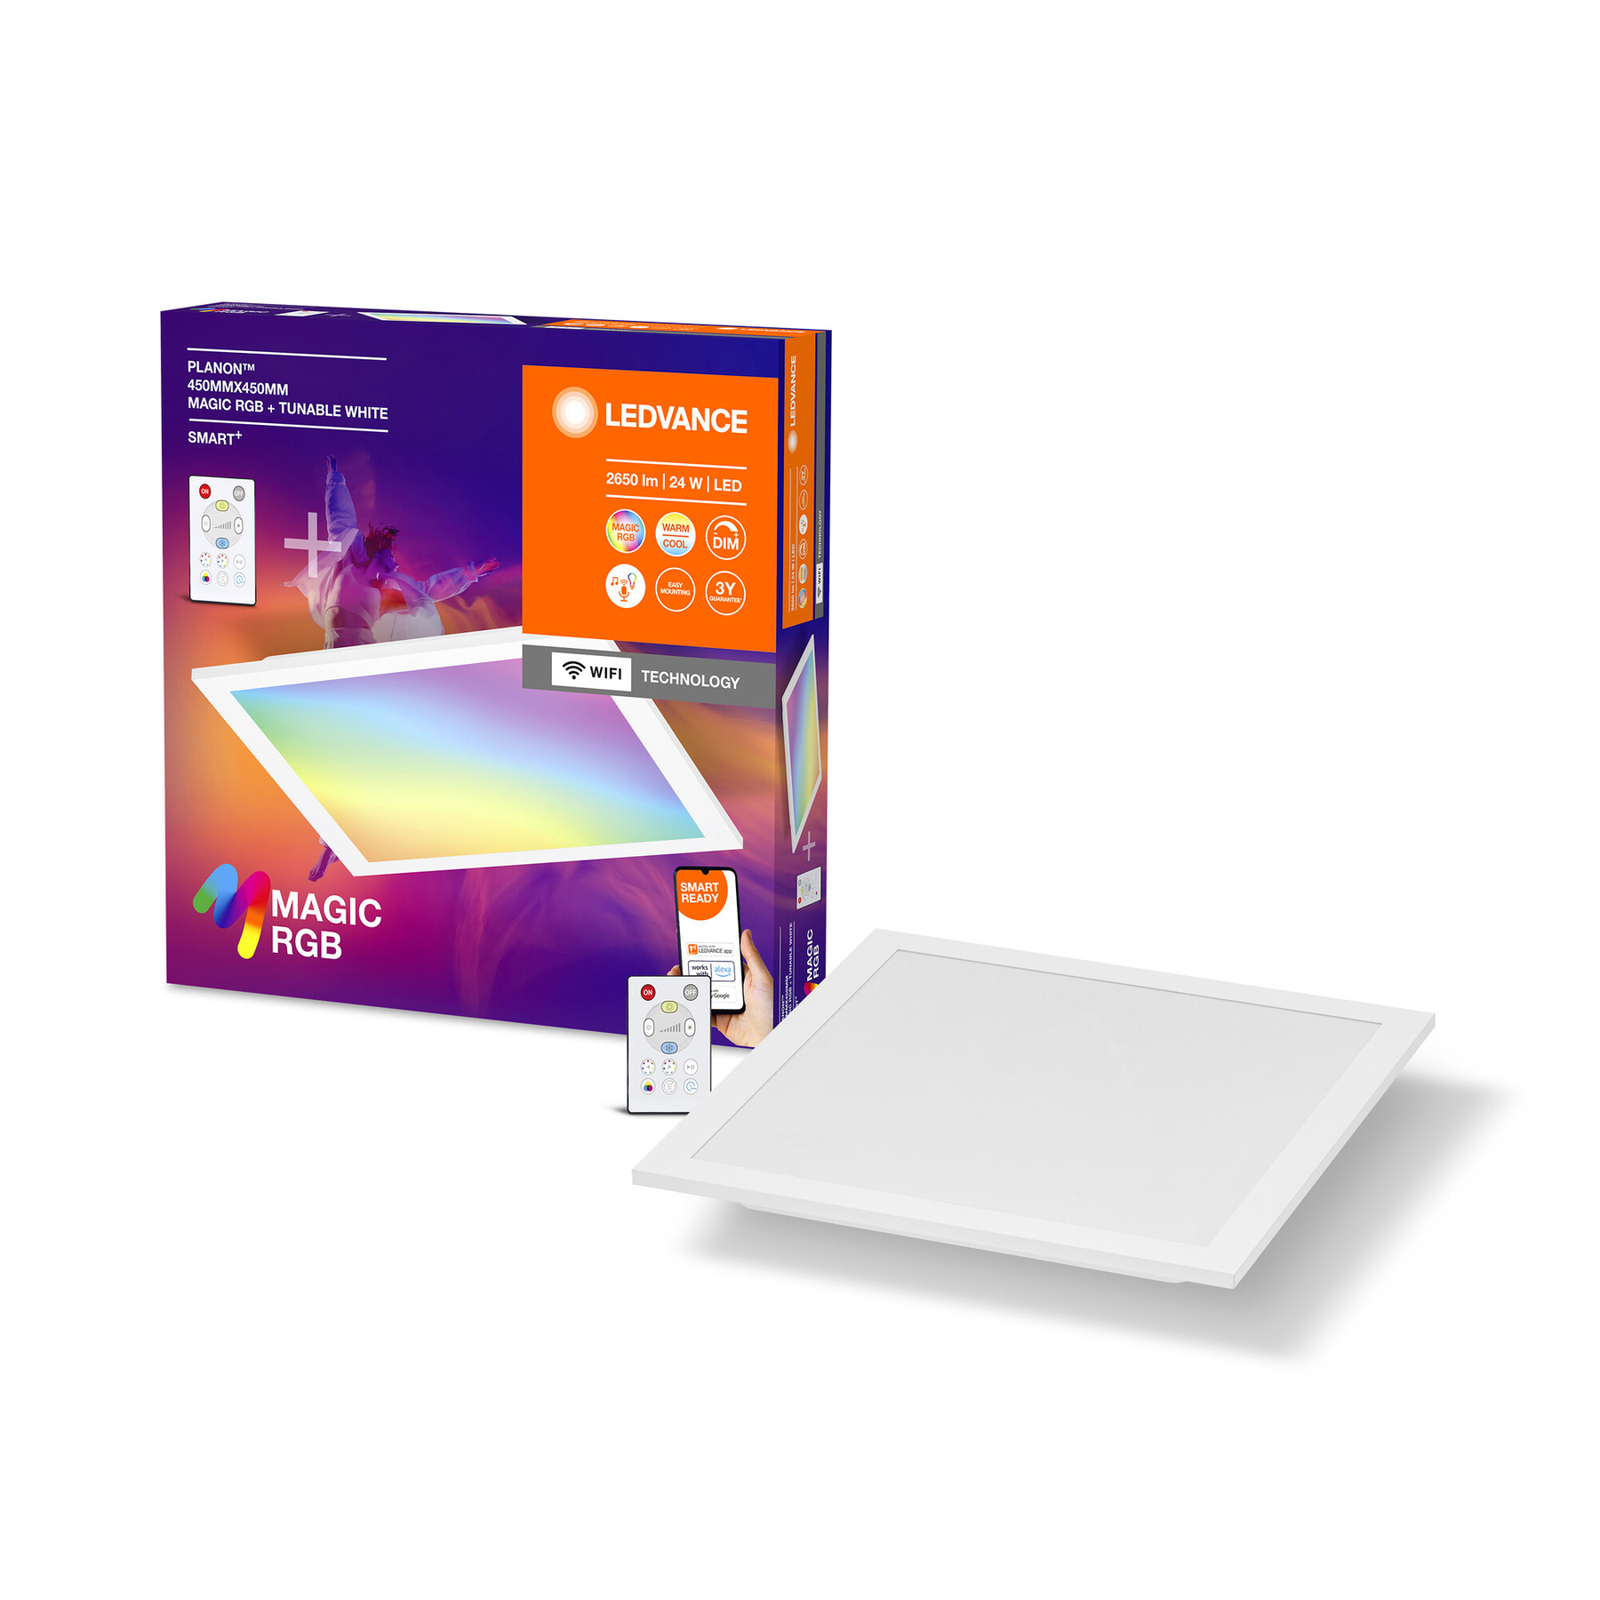 LEDVANCE SMART+ WiFi Planon Magic RGBW 45x45cm